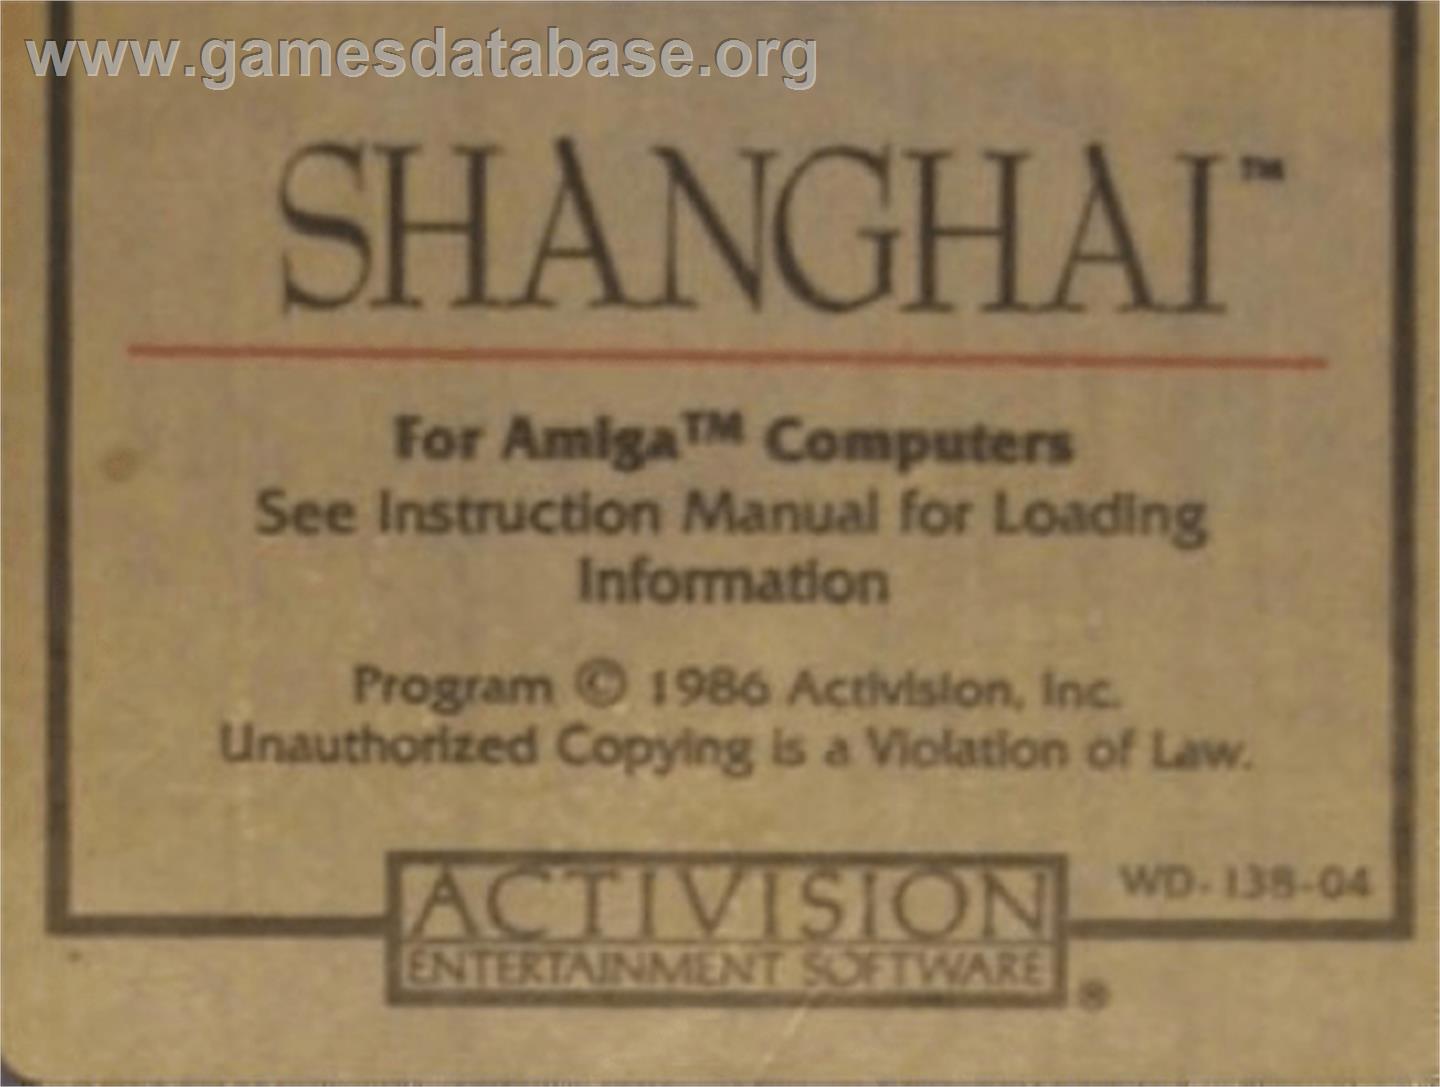 Shanghai - Commodore Amiga - Artwork - Cartridge Top